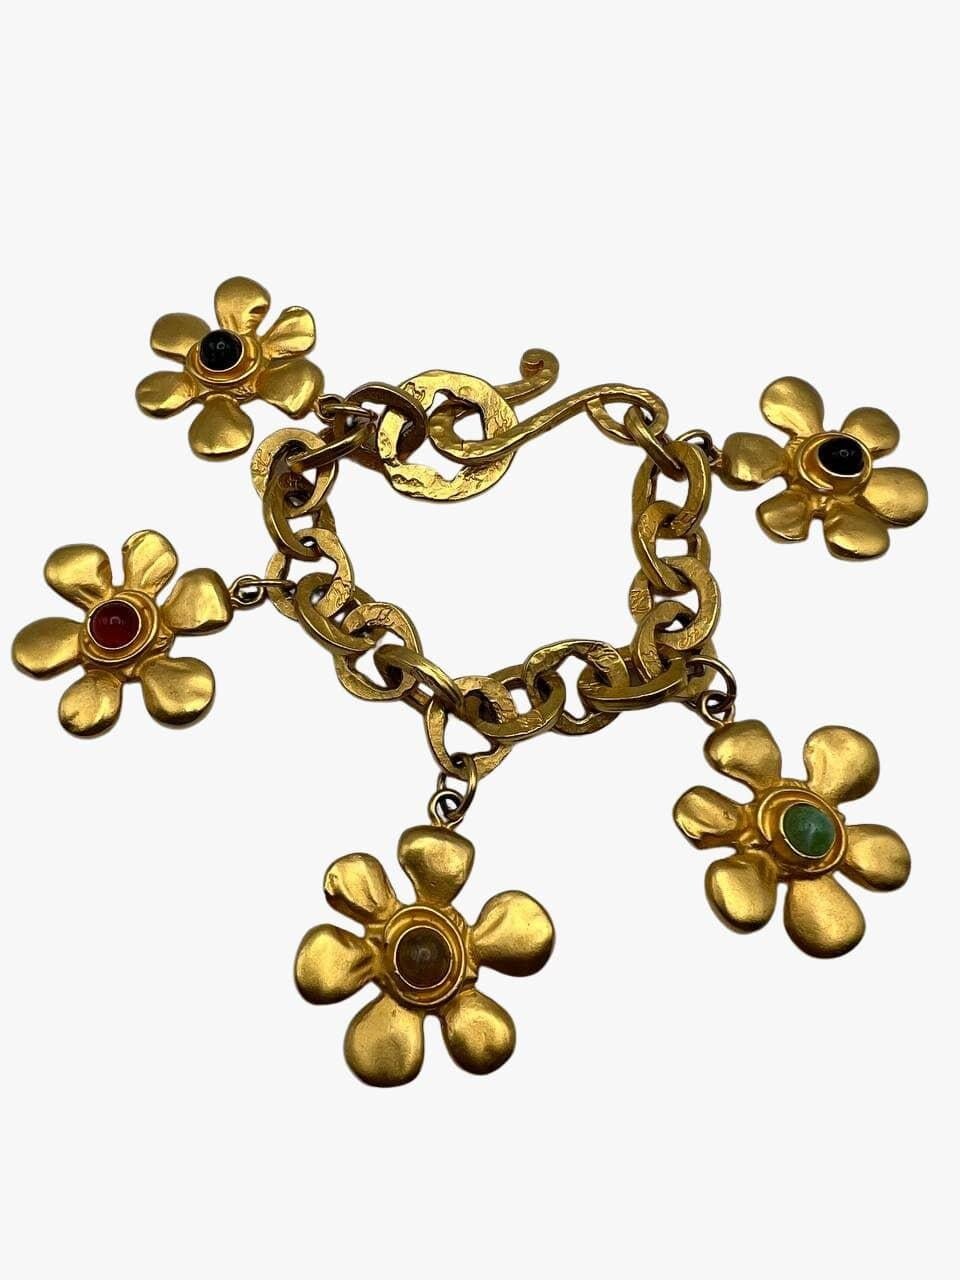 Romantic Karl Lagerfeld Vintage 24k Gold Plated Daisy Flower Charm Bracelet, 1980s For Sale